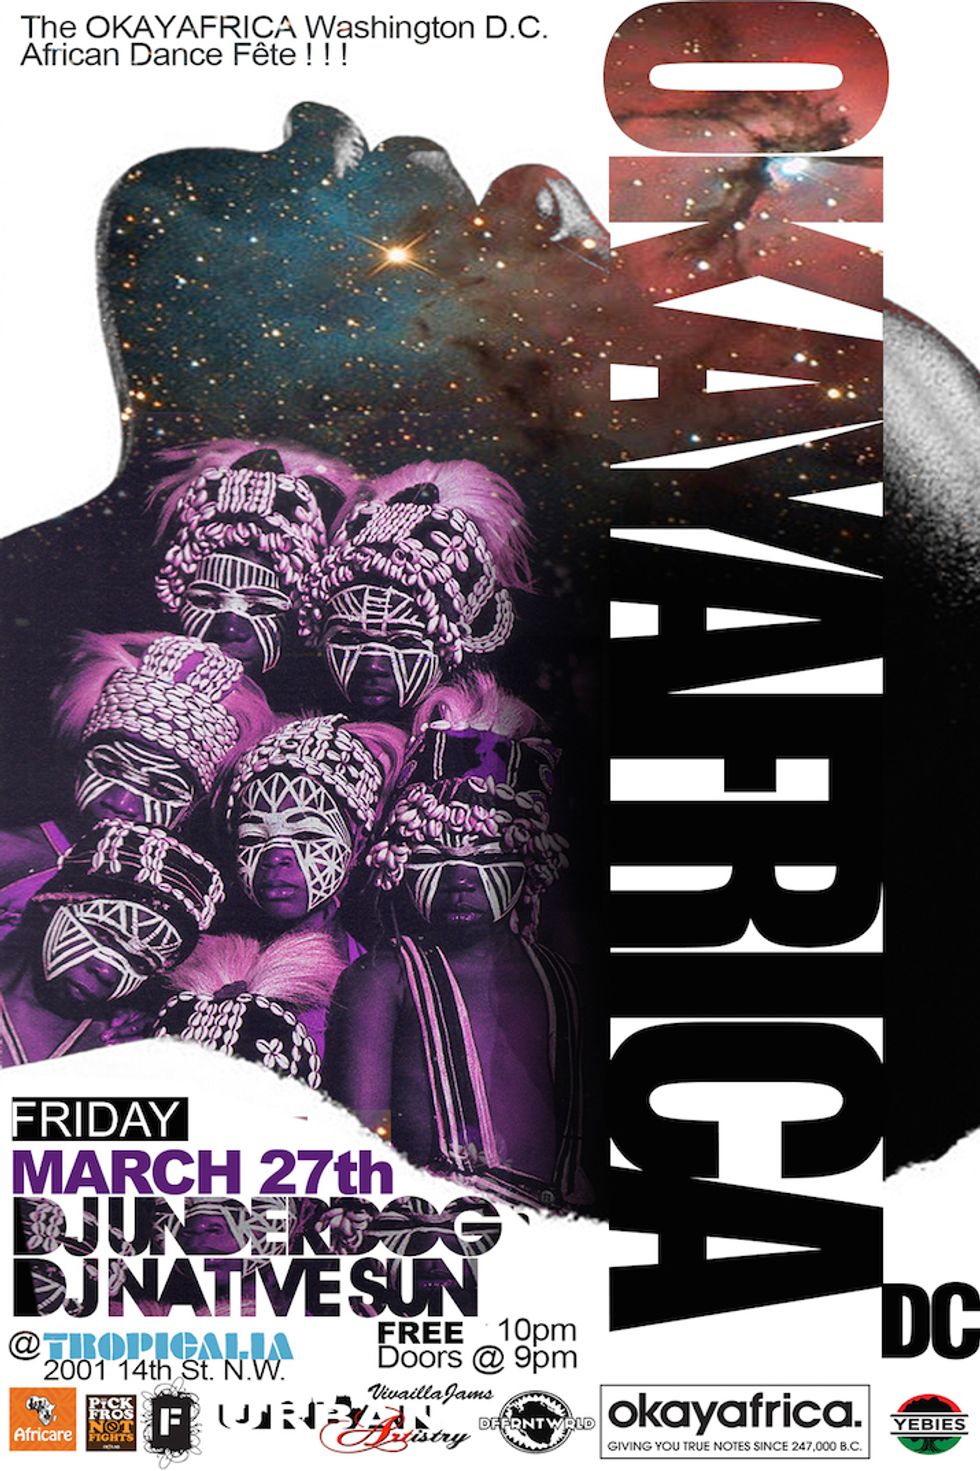 #OKAYAFRICADC's African Dance Fête With DJ Underdog! [3/27]